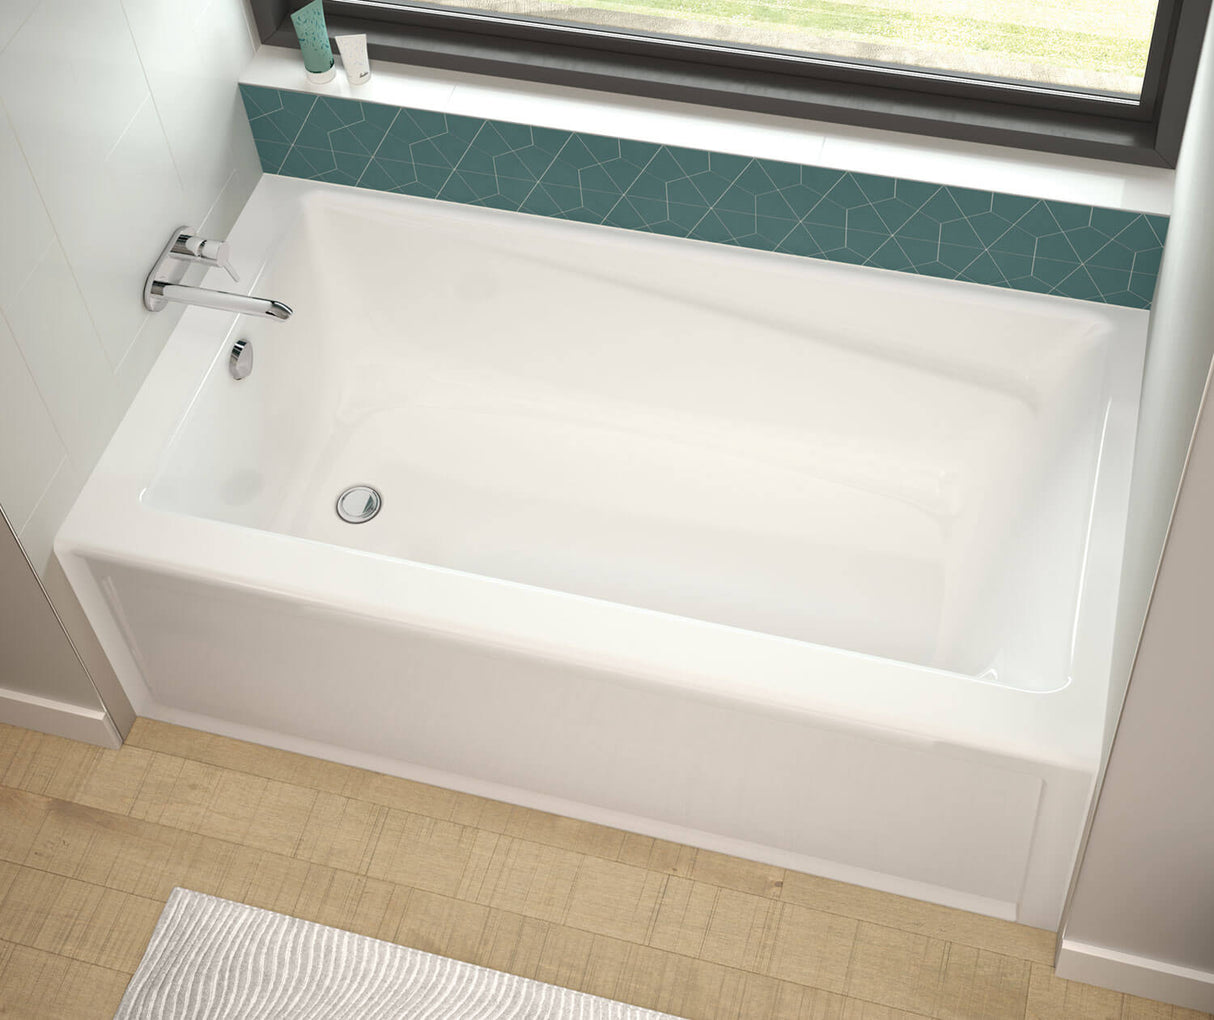 MAAX 106179-L-103-001 Exhibit 6636 IFS Acrylic Alcove Left-Hand Drain Aeroeffect Bathtub in White